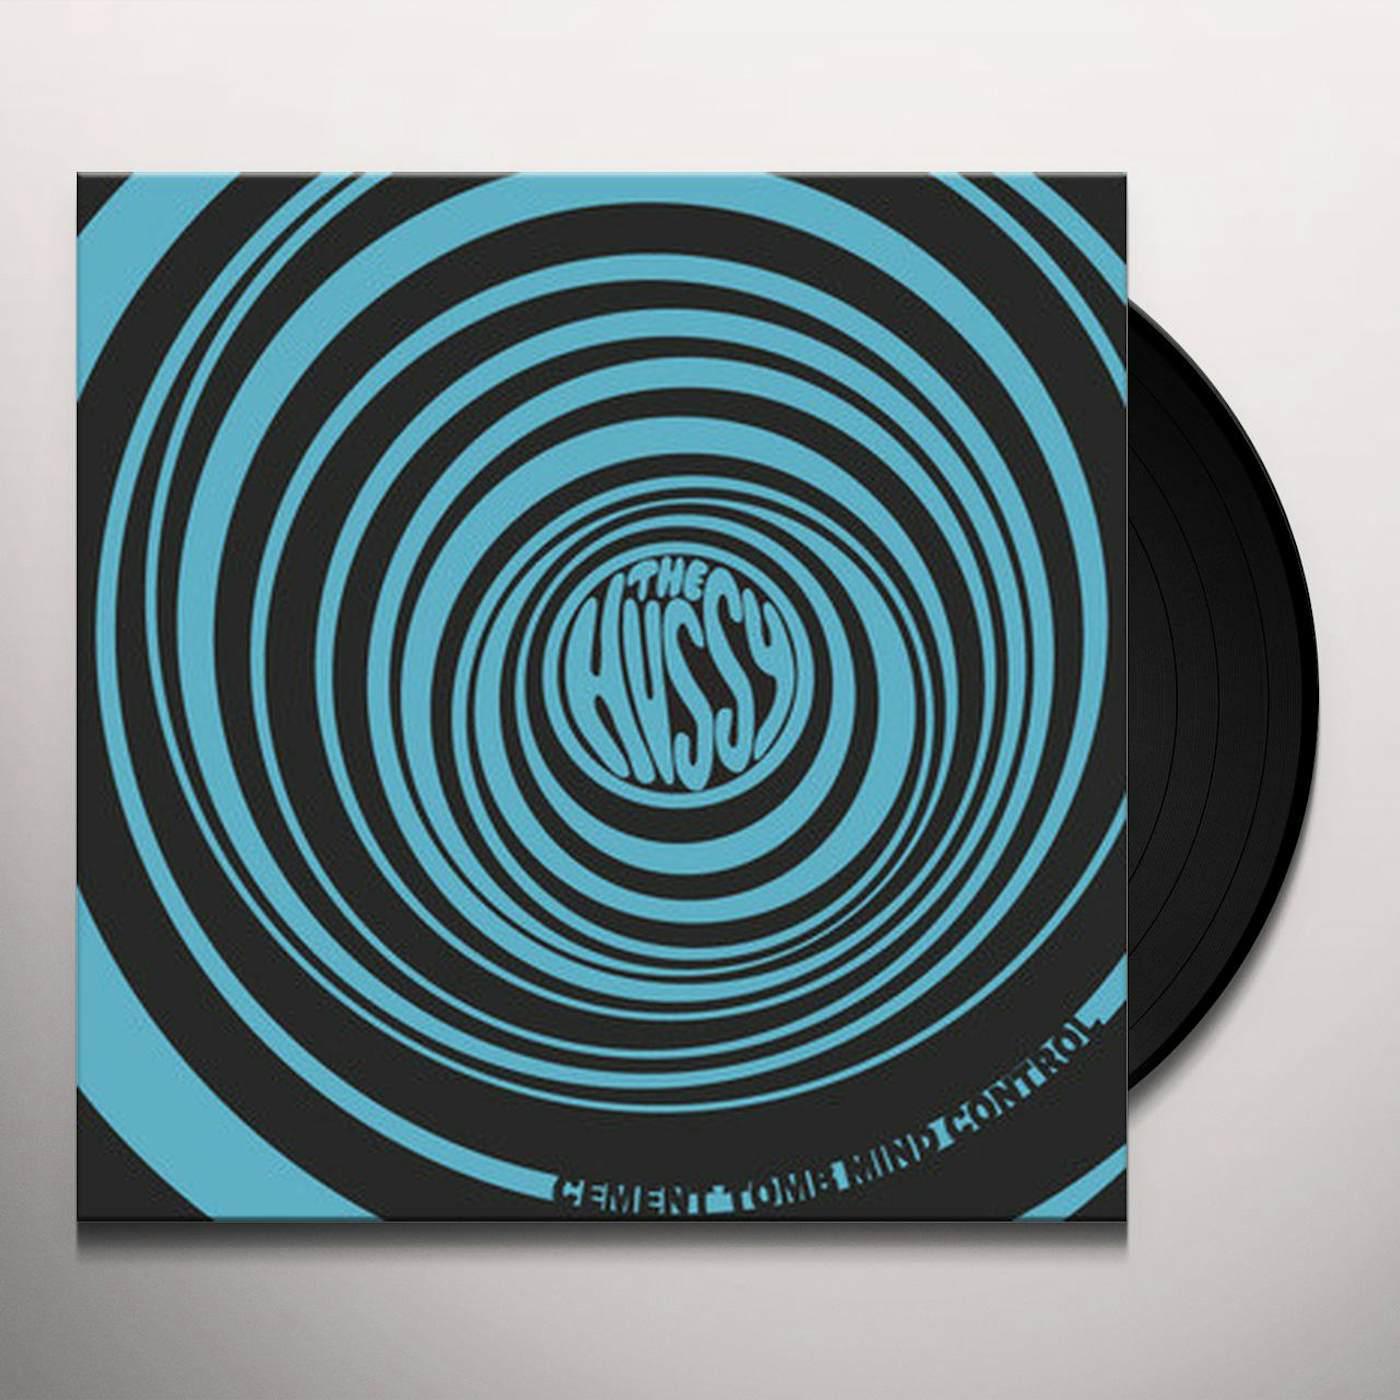 Hussy CEMENT TOMB MIND CONTROL Vinyl Record